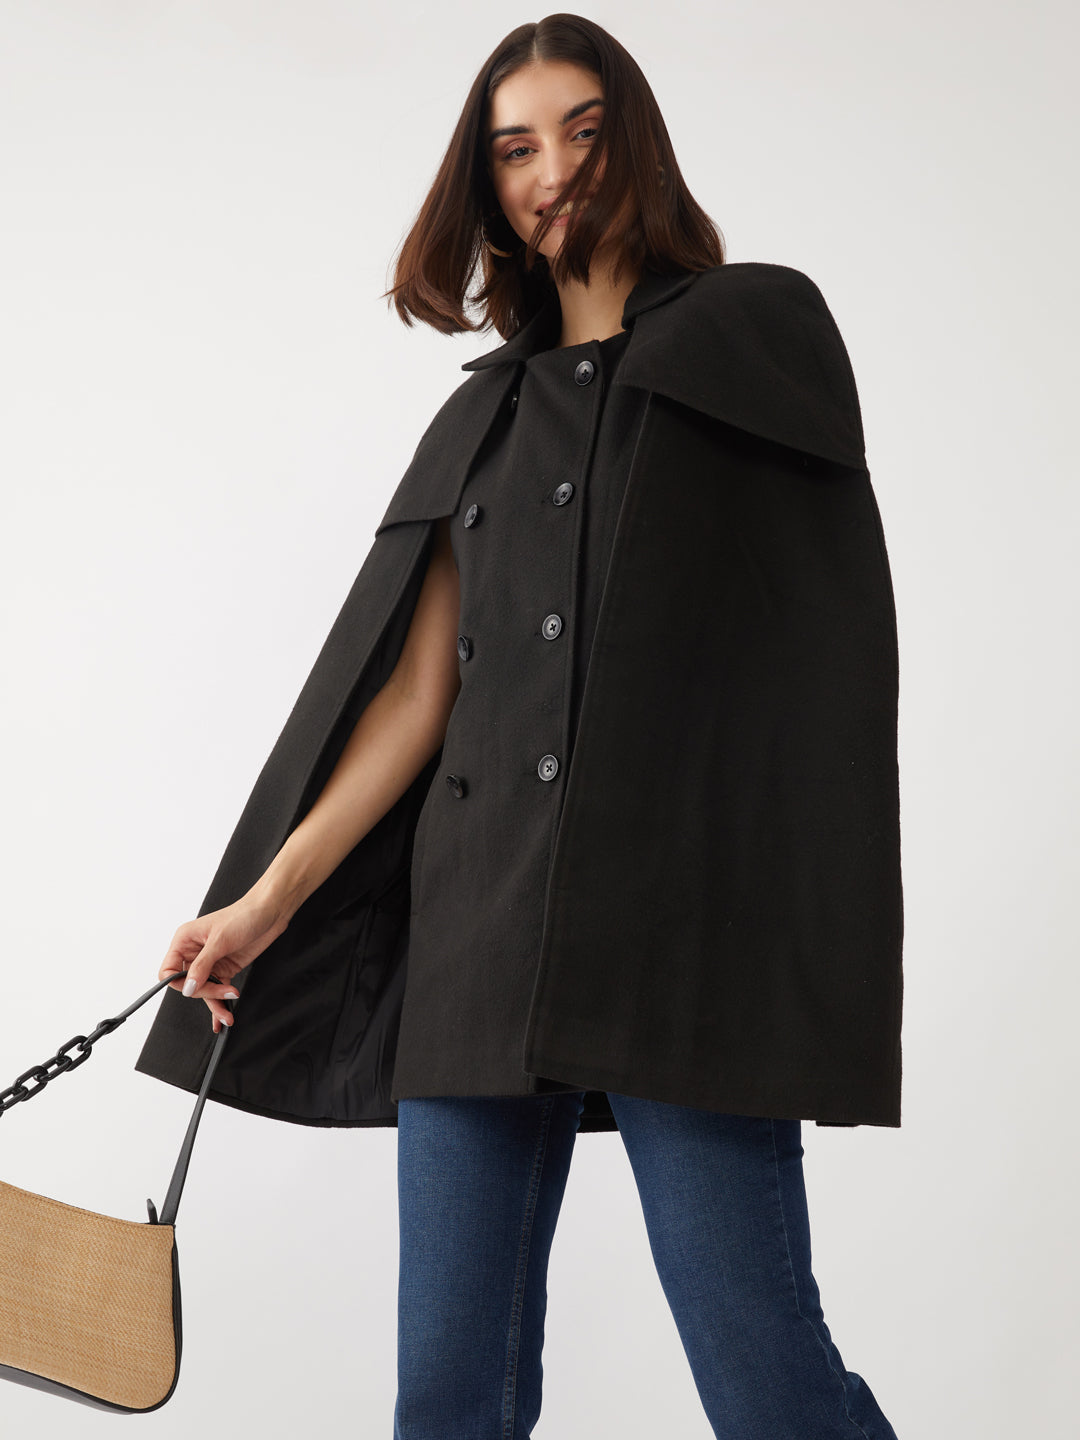 Black Solid Cape Coat For Women